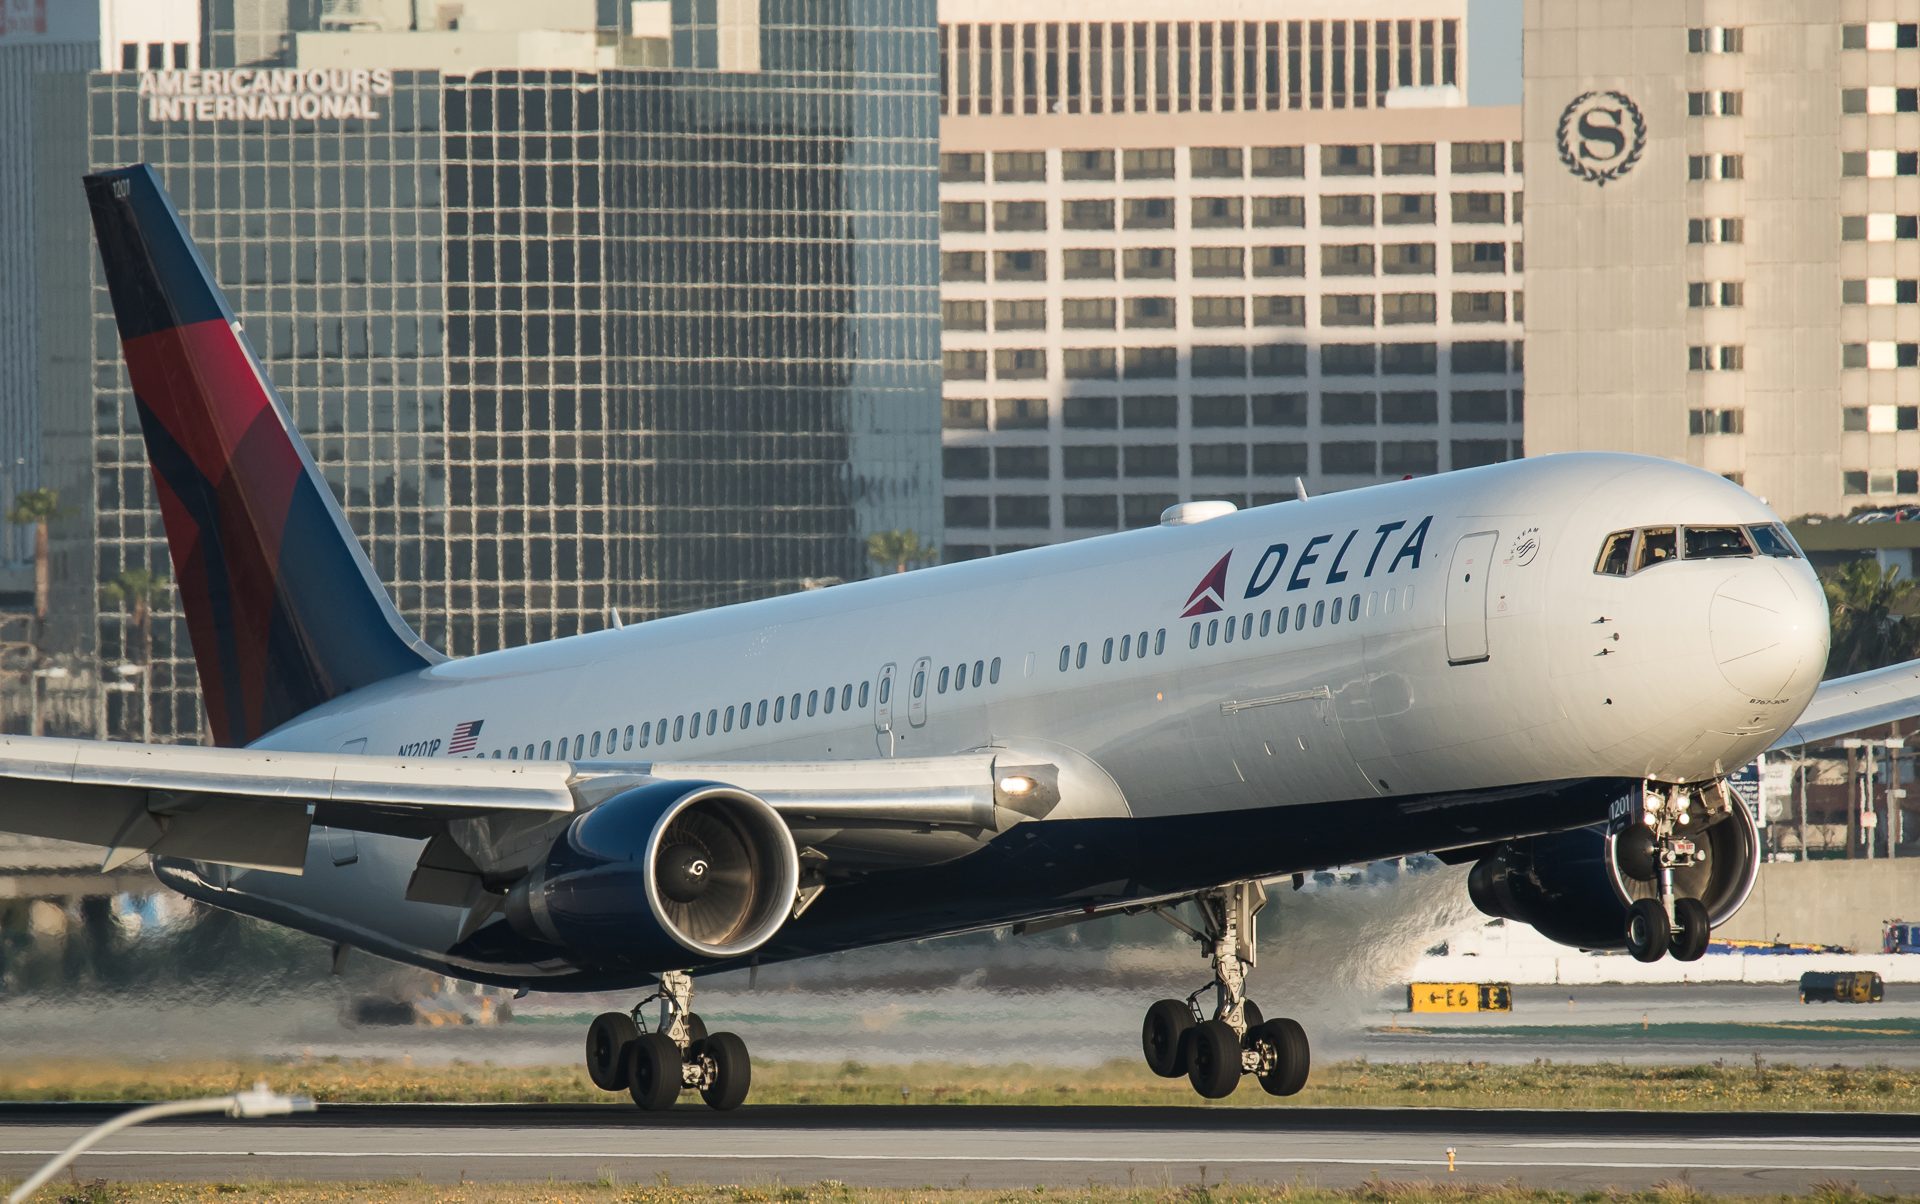 Delta Boeing 767-300 LAX los angeles landing